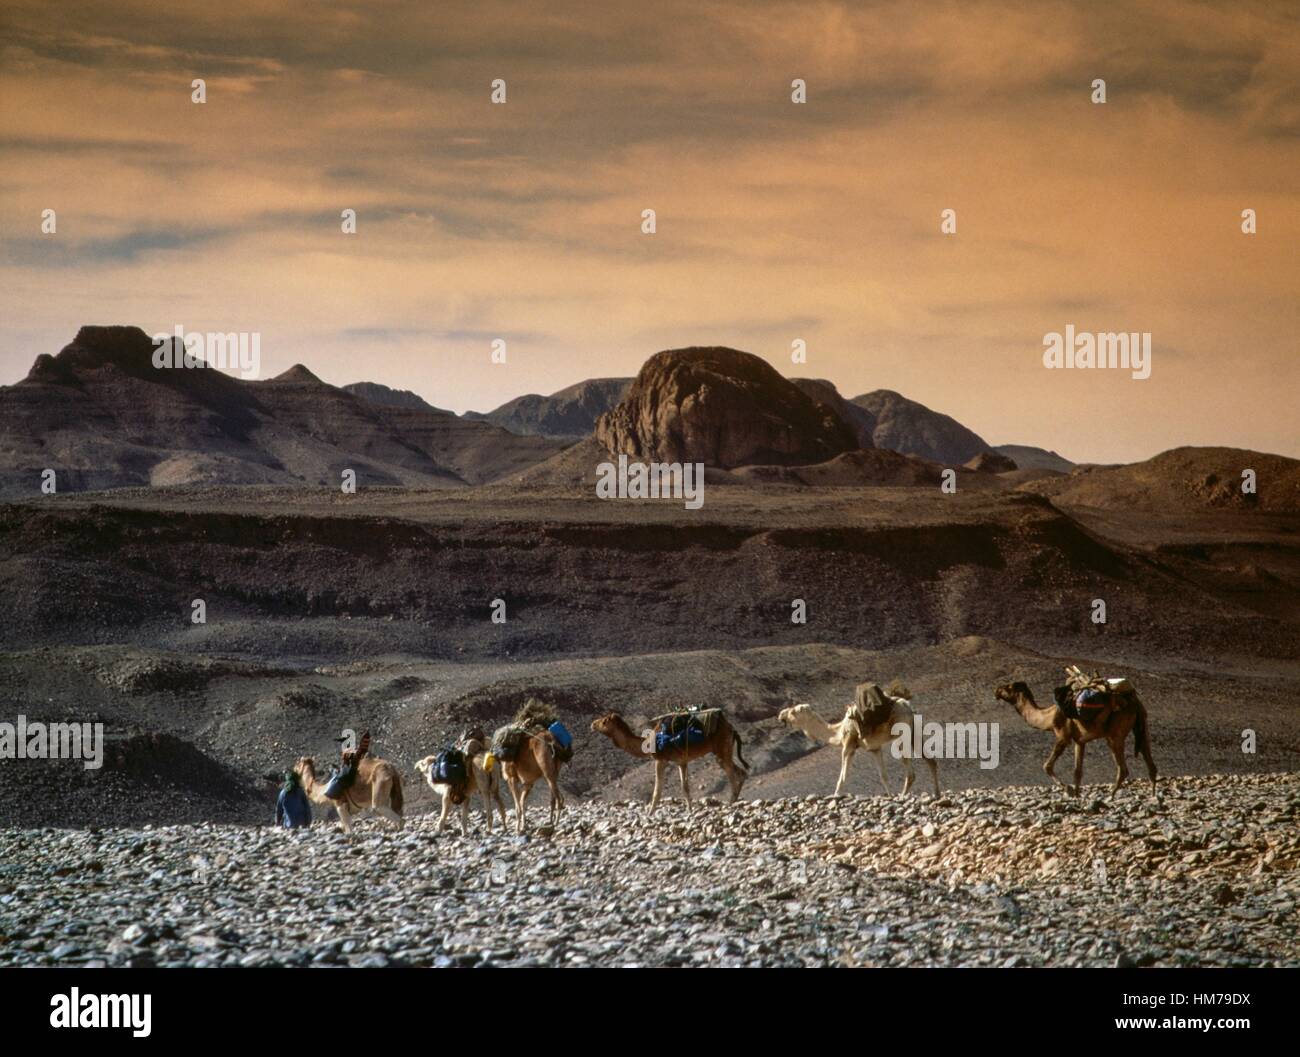 Camel caravan, Hoggar Mountains (Ahaggar), mountain range formed from volcanic rocks, Sahara Desert, Algeria. Stock Photo